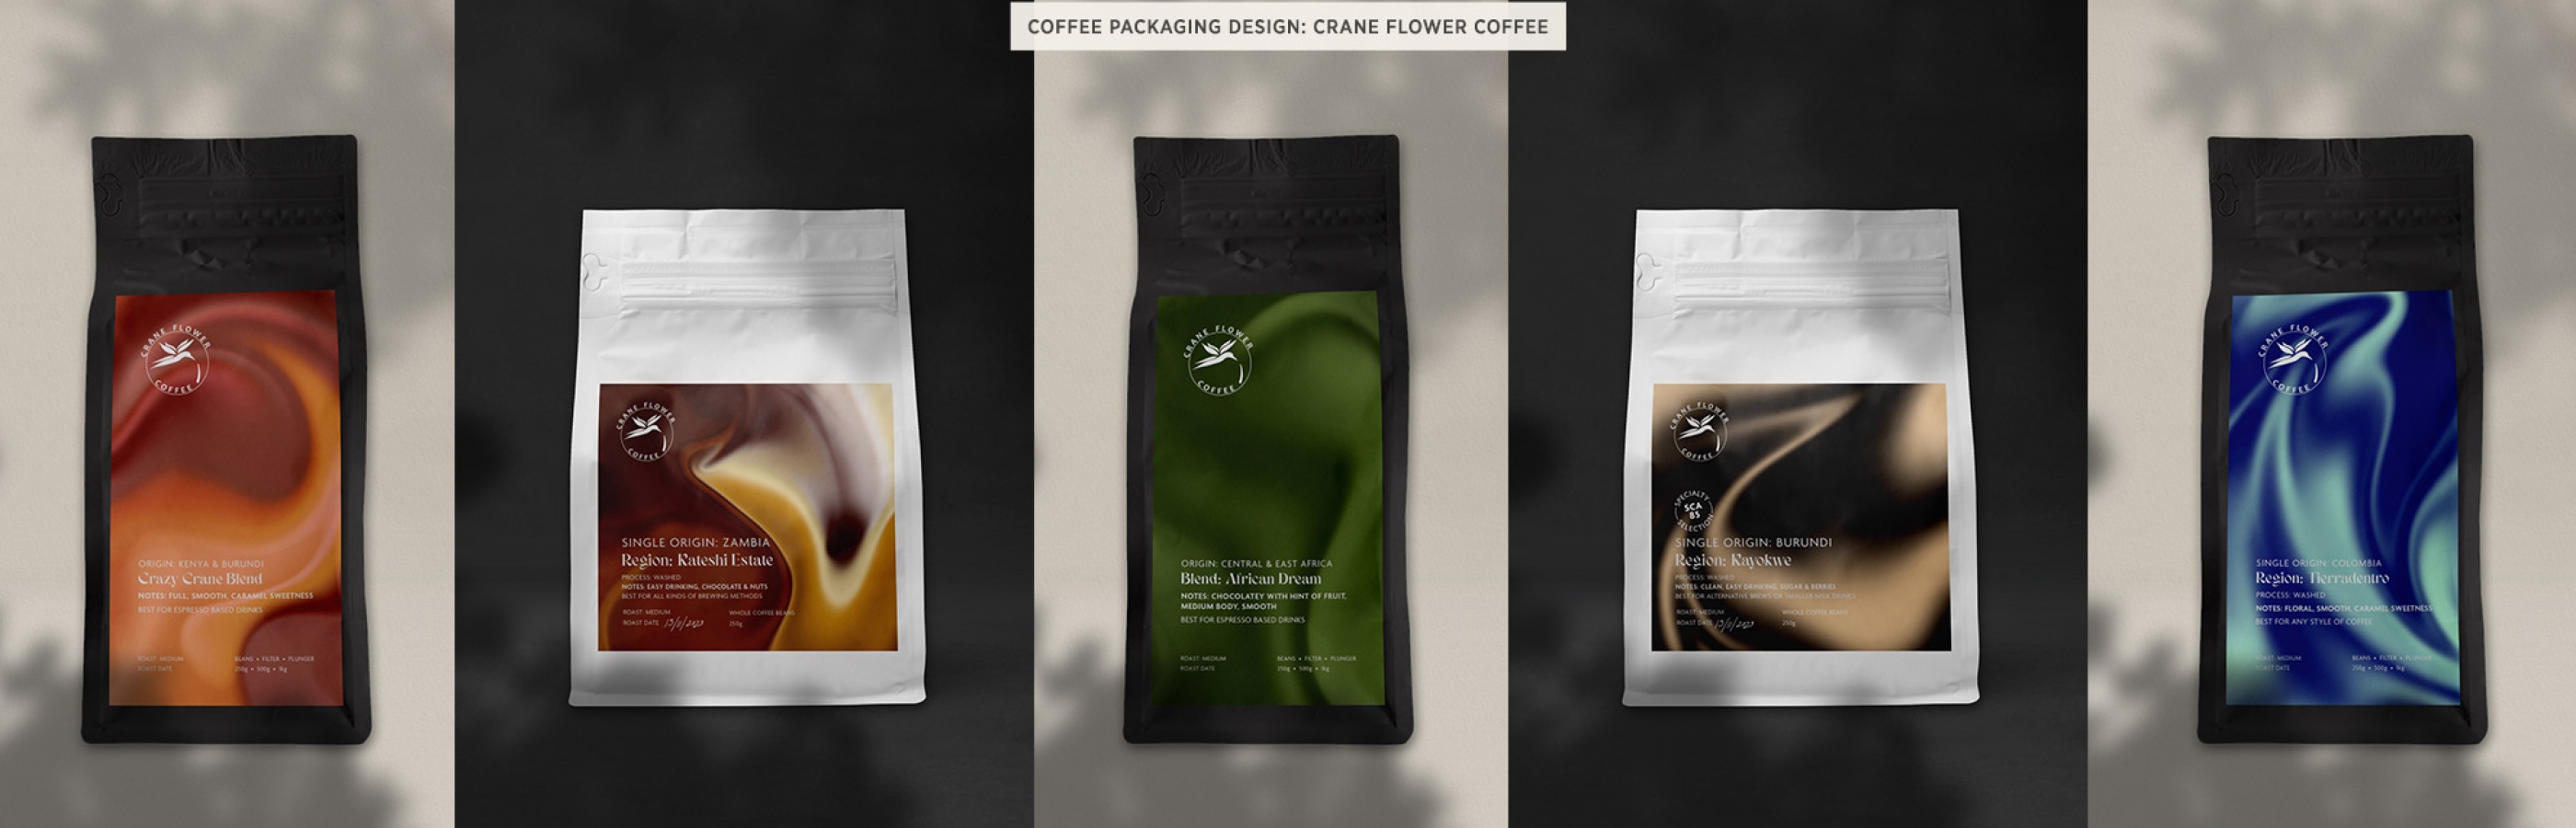 fathima’s-studio_crane-flower-coffee-packaging-design